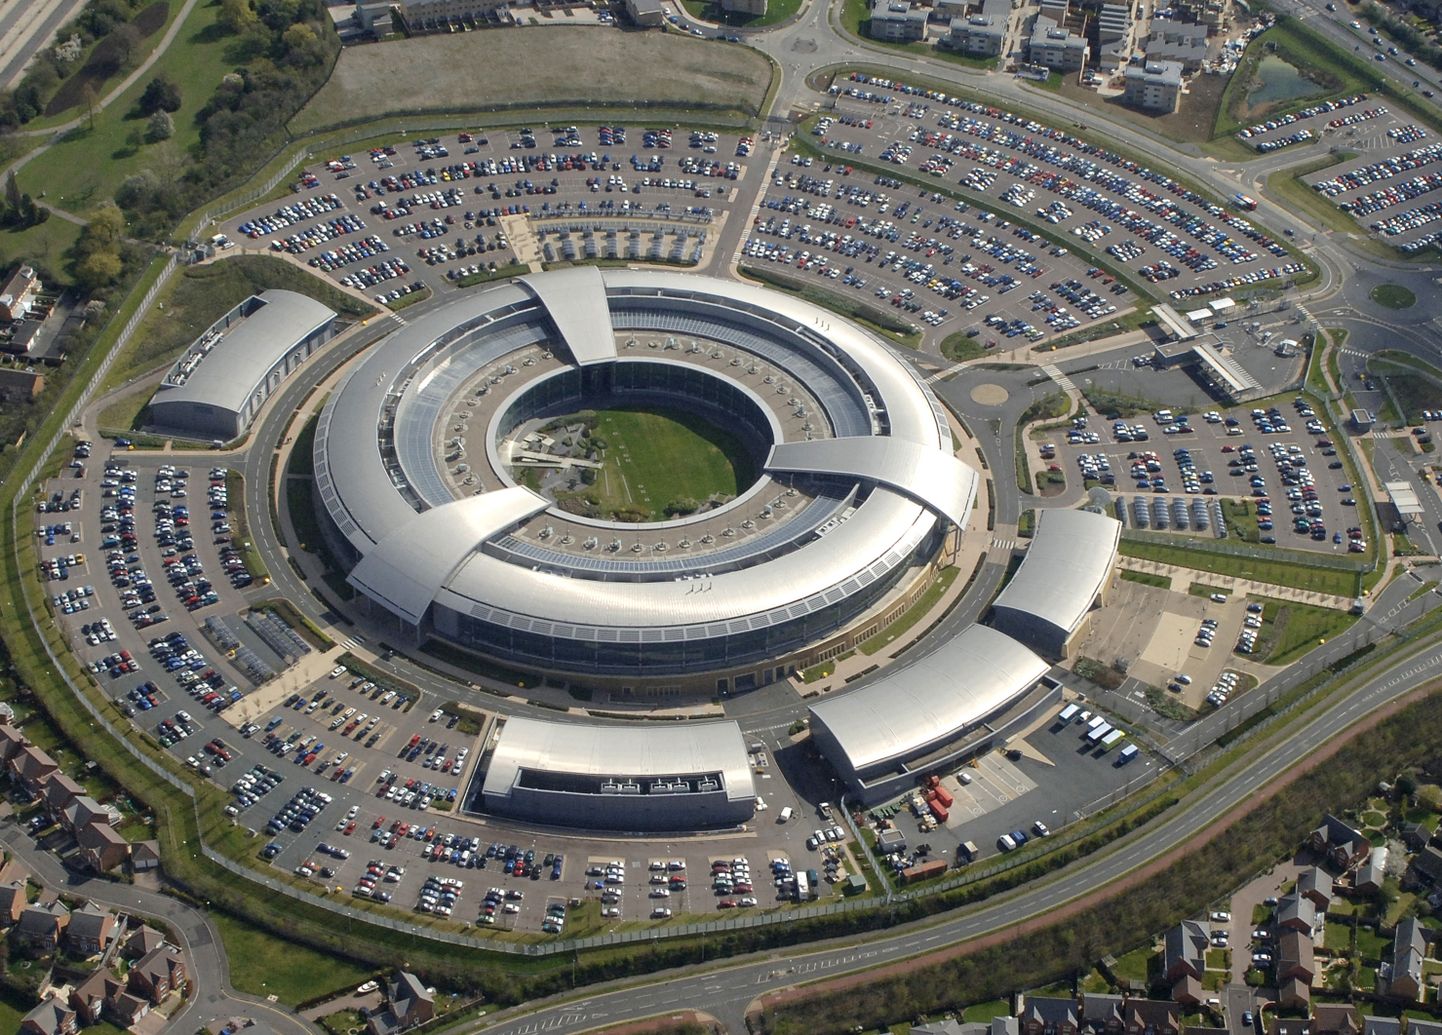 Briti küberluureagentuuri GCHQ peakorter Cheltenhamis. Foto on illustratiivne.